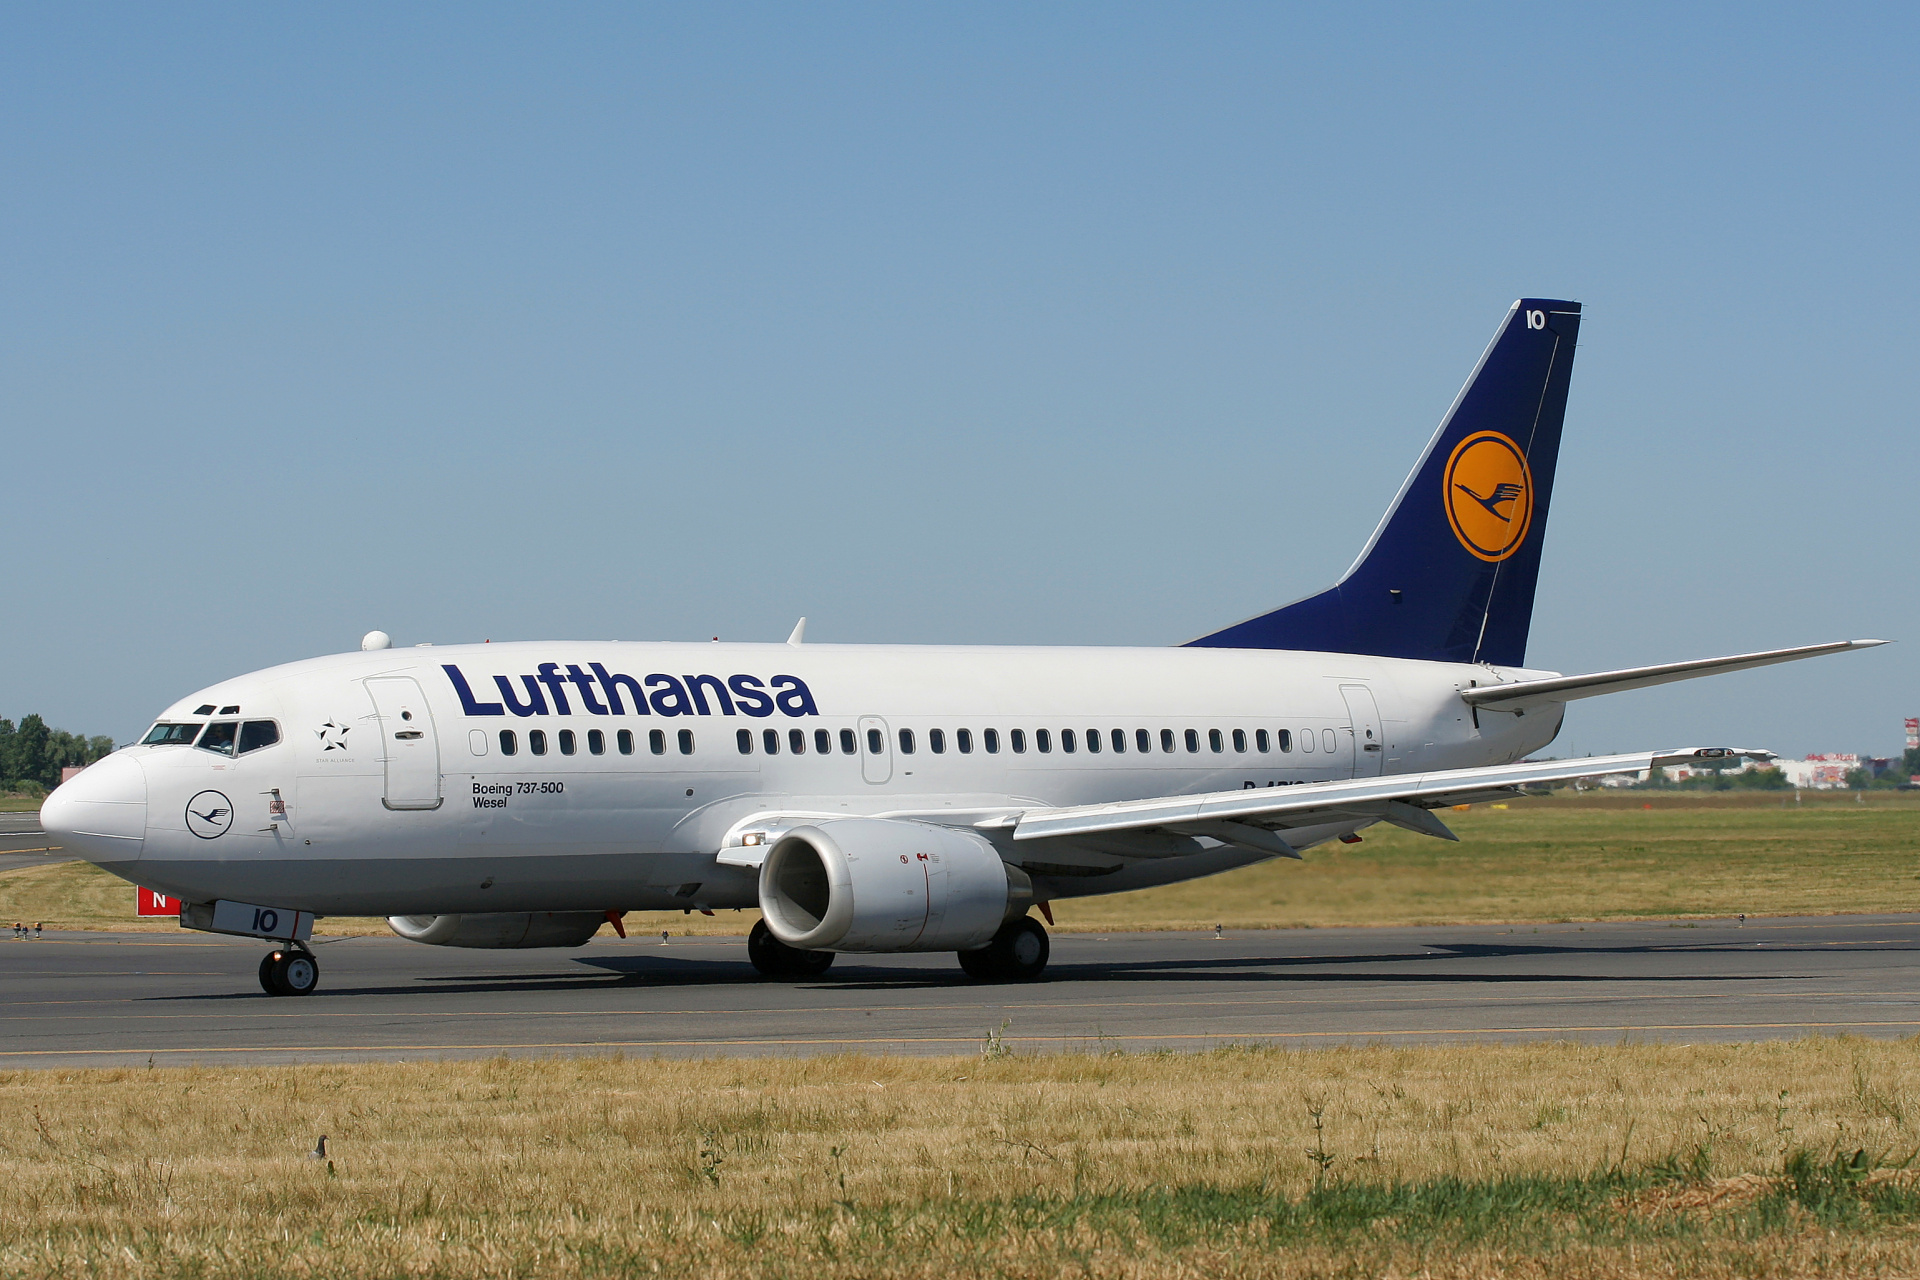 D-ABIO (Aircraft » EPWA Spotting » Boeing 737-500 » Lufthansa)